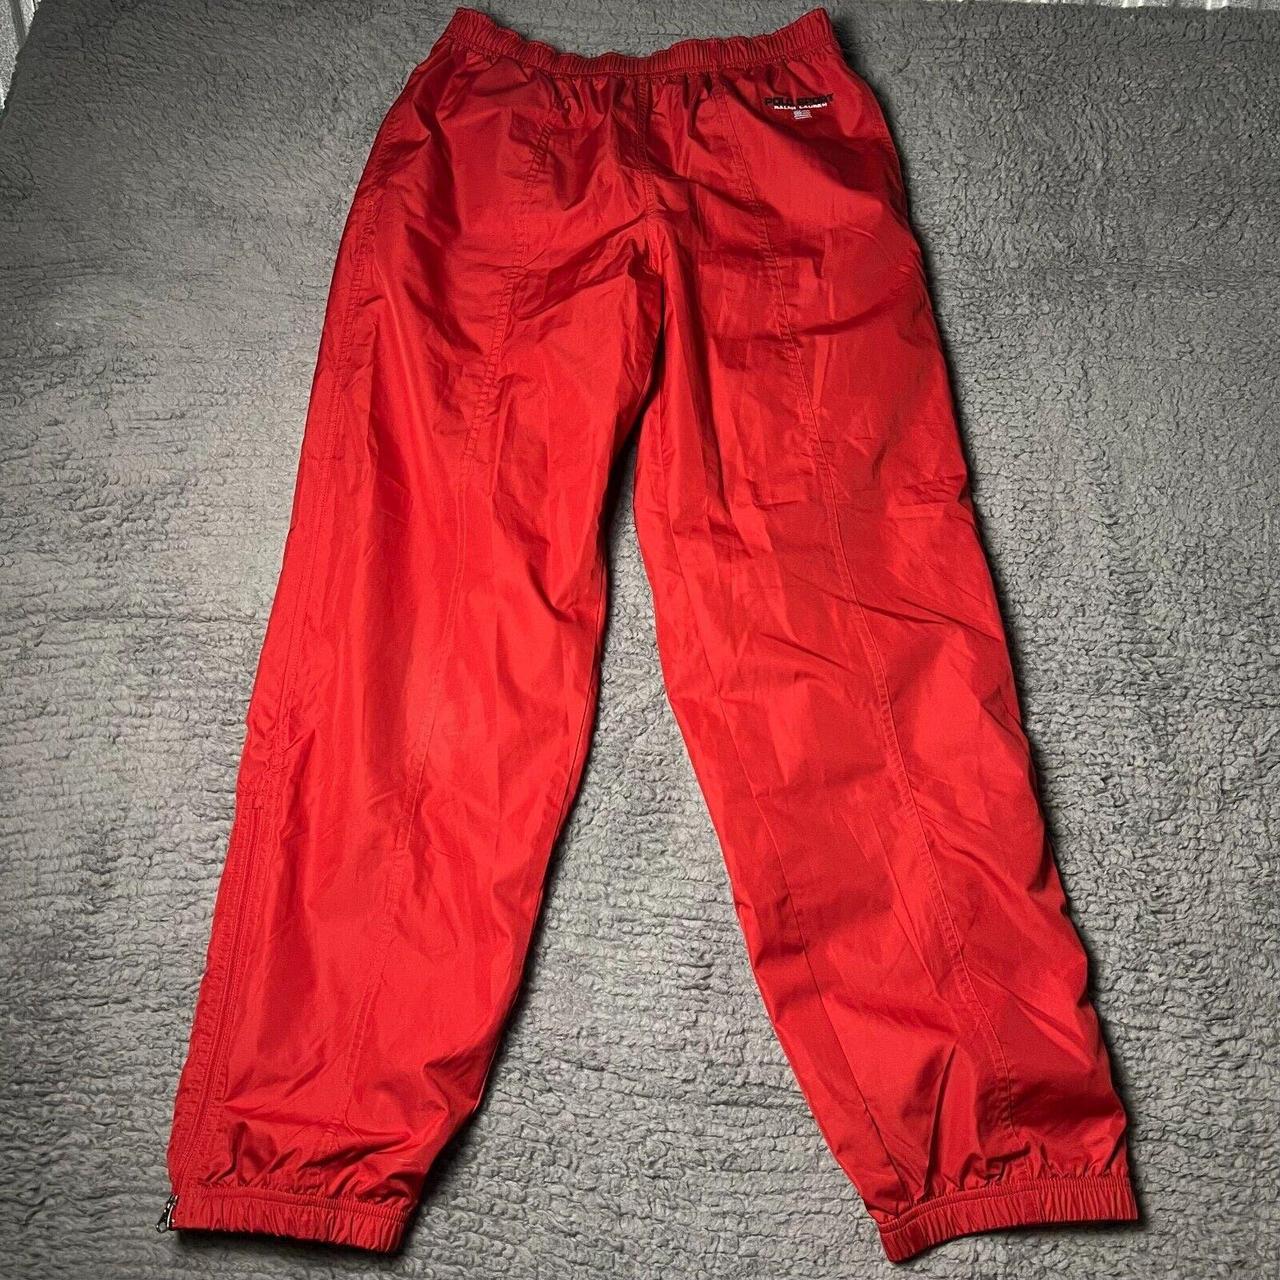 A sick pair of vintage Polo Sport Athletic Pants - Depop